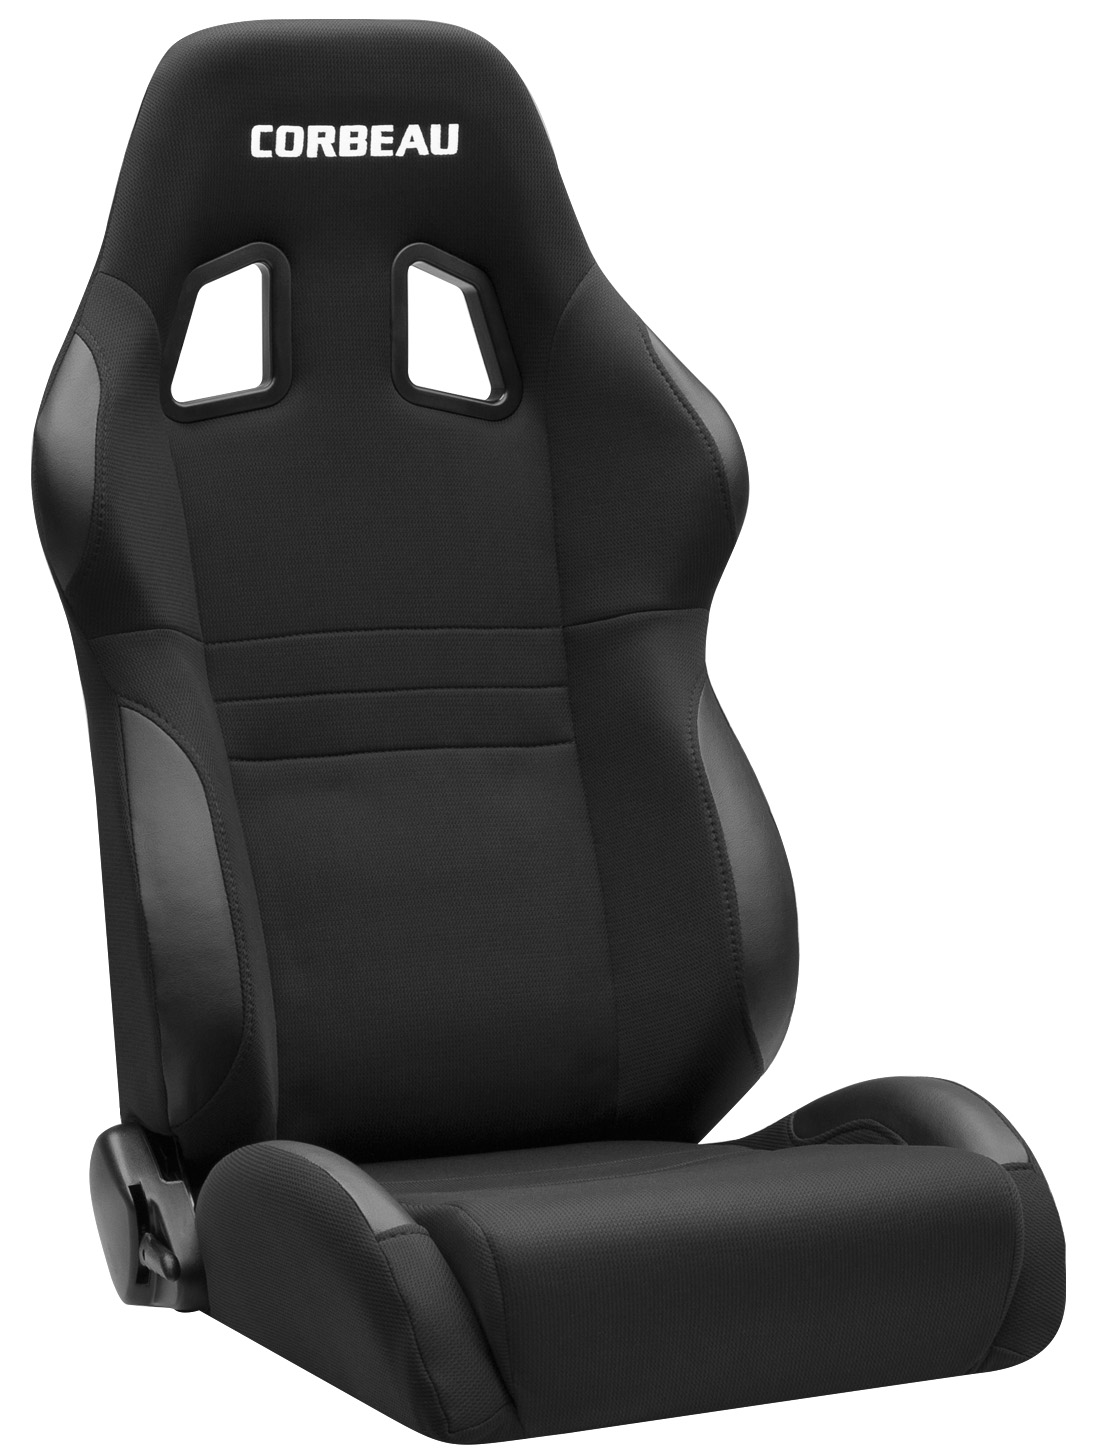 Corbeau A4 Racing Seat,  Black Cloth Wide, 60091WPR